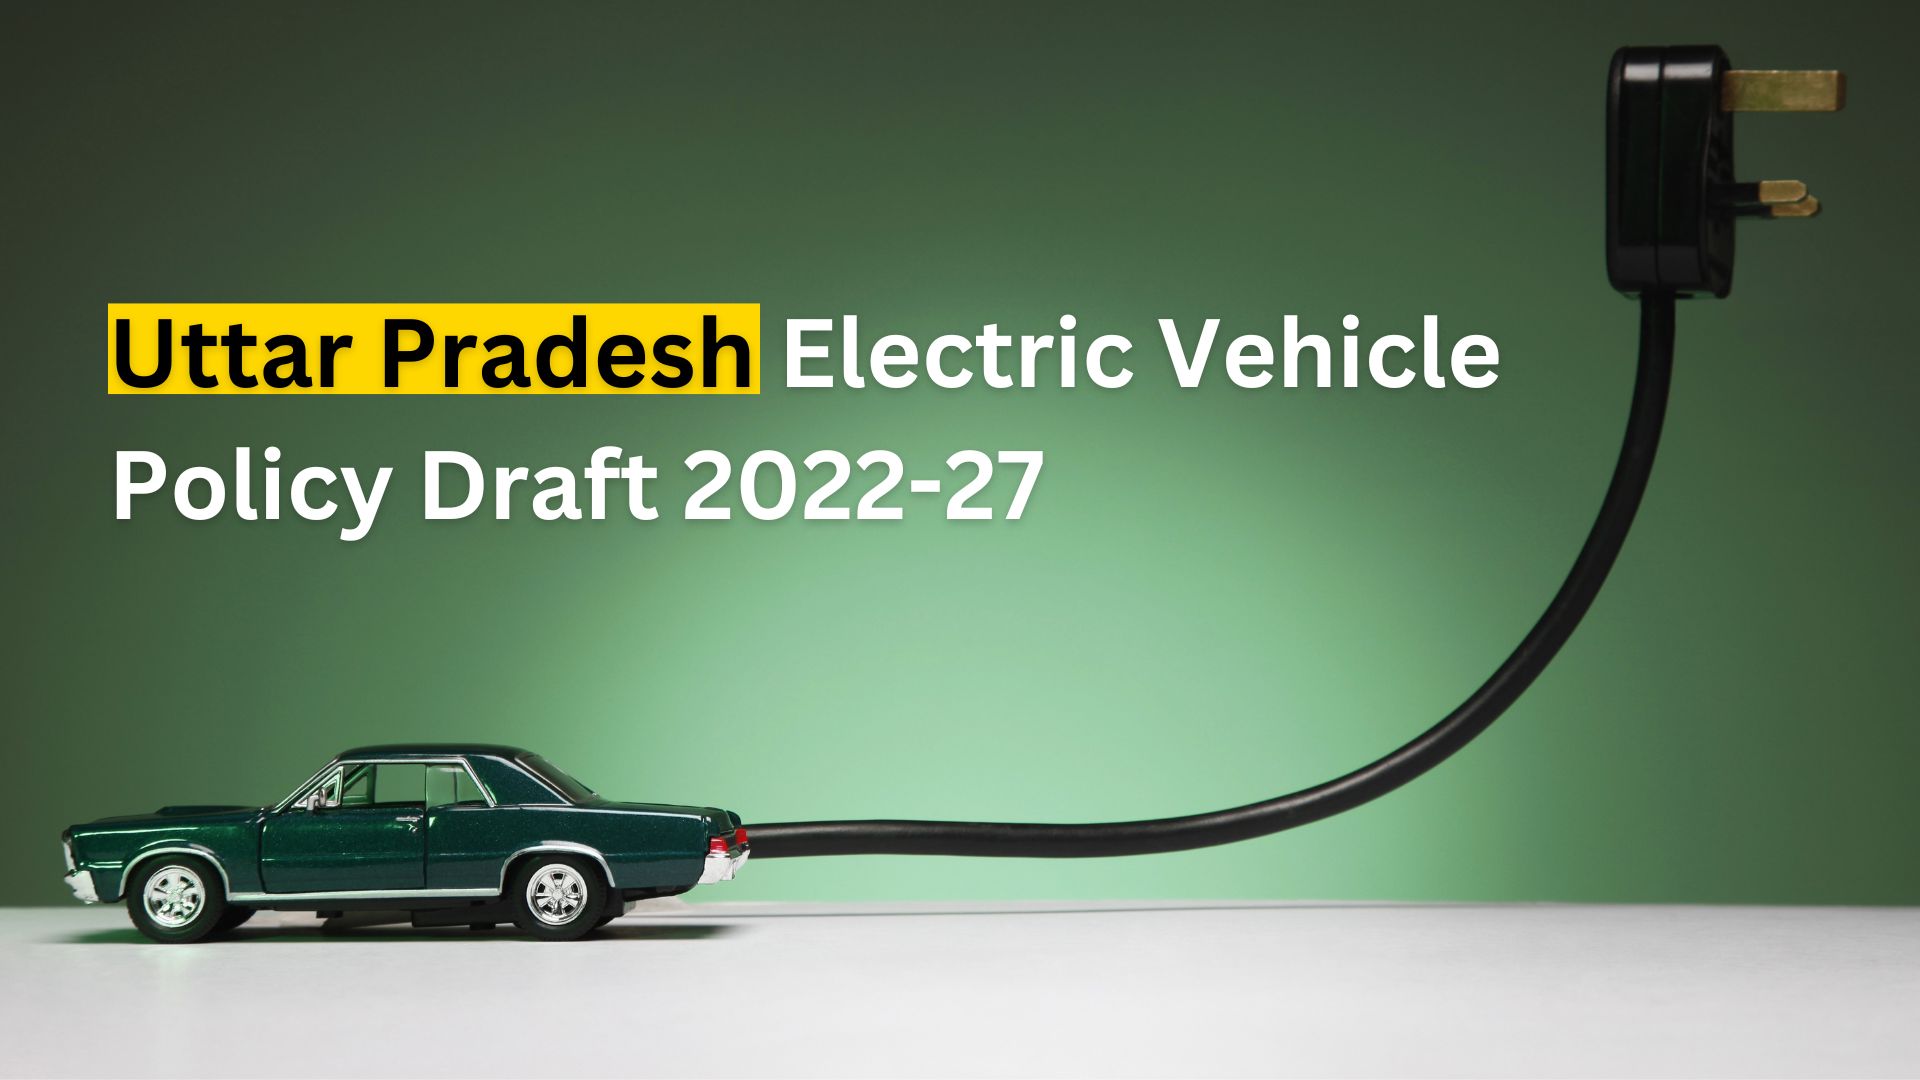 https://e-vehicleinfo.com/uttar-pradesh-electric-vehicle-policy-draft-2022-27/